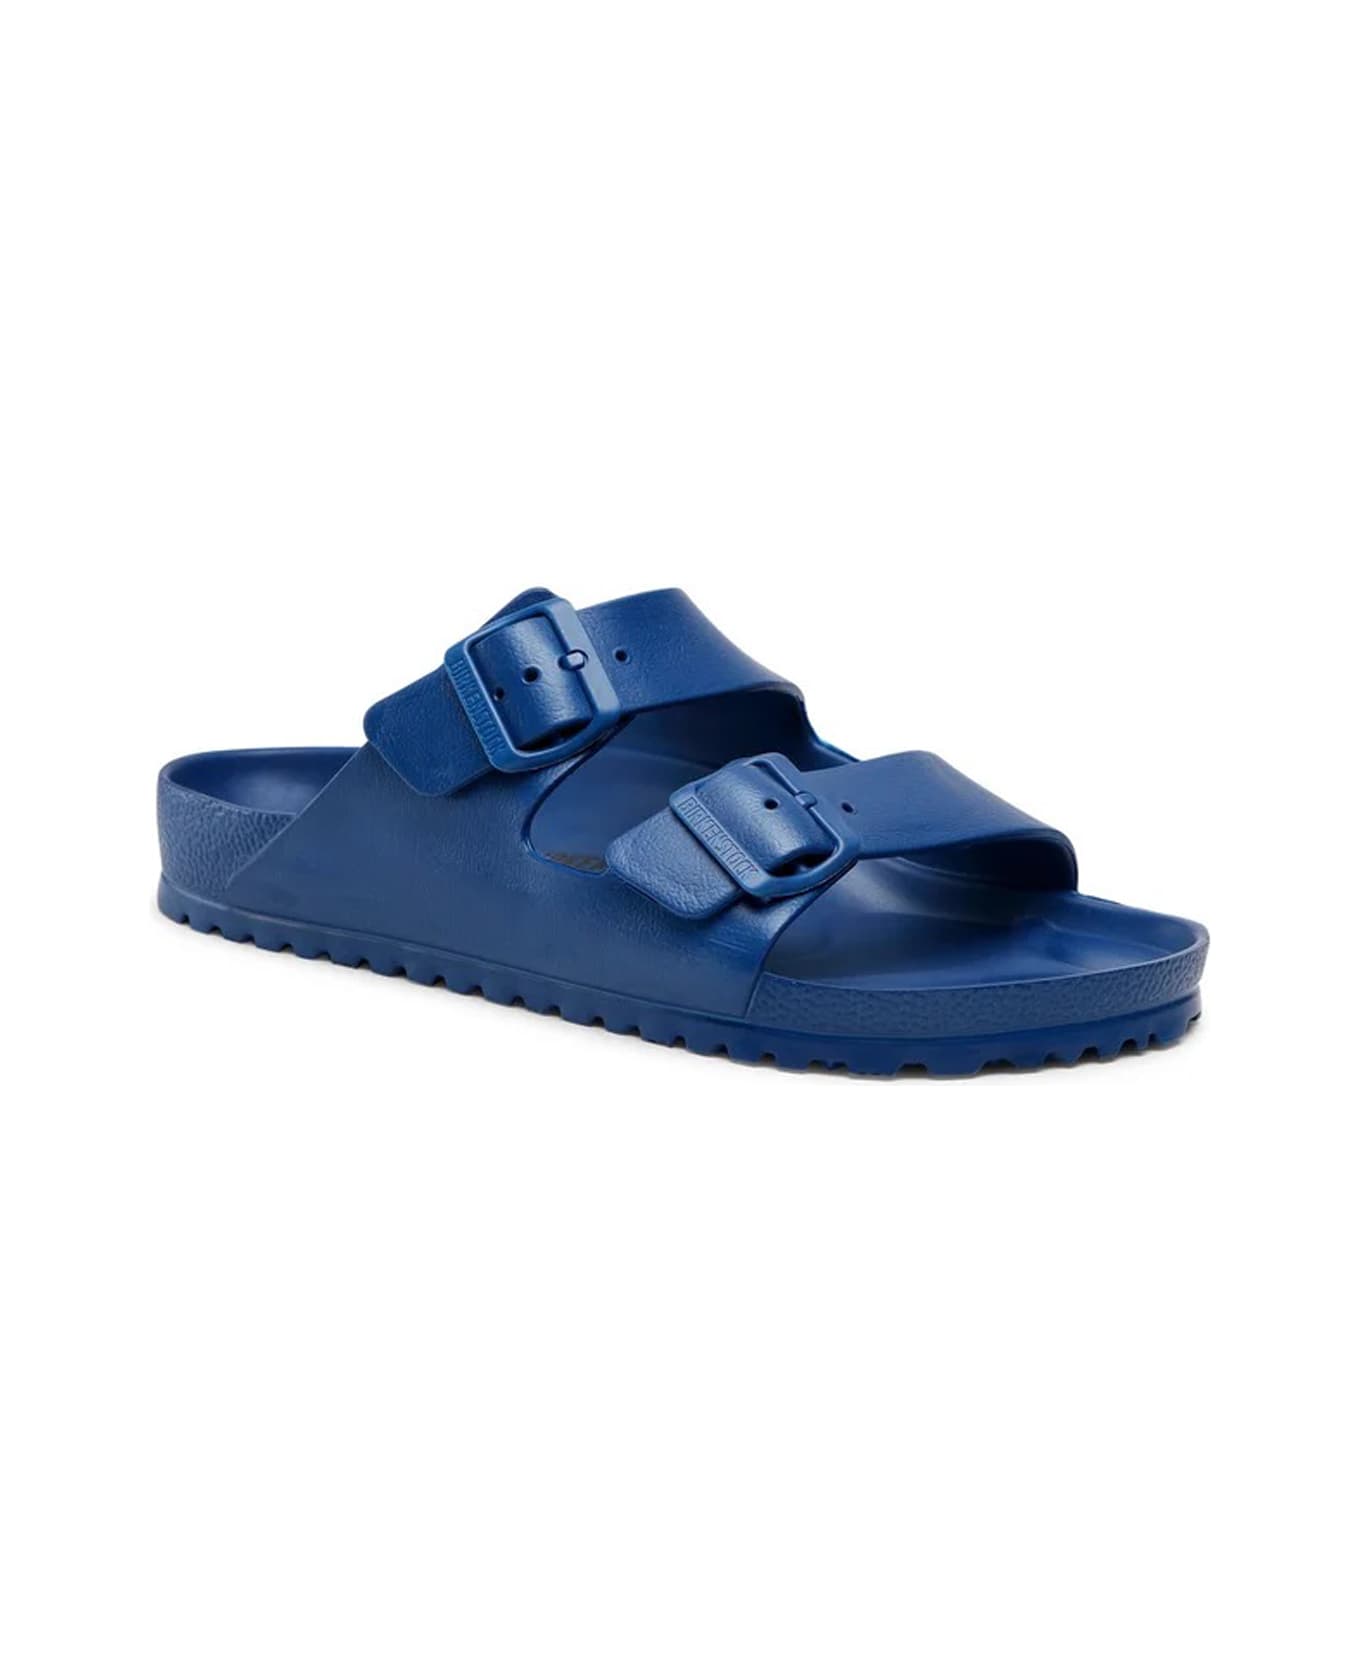 Birkenstock Flat Sandal - Blue